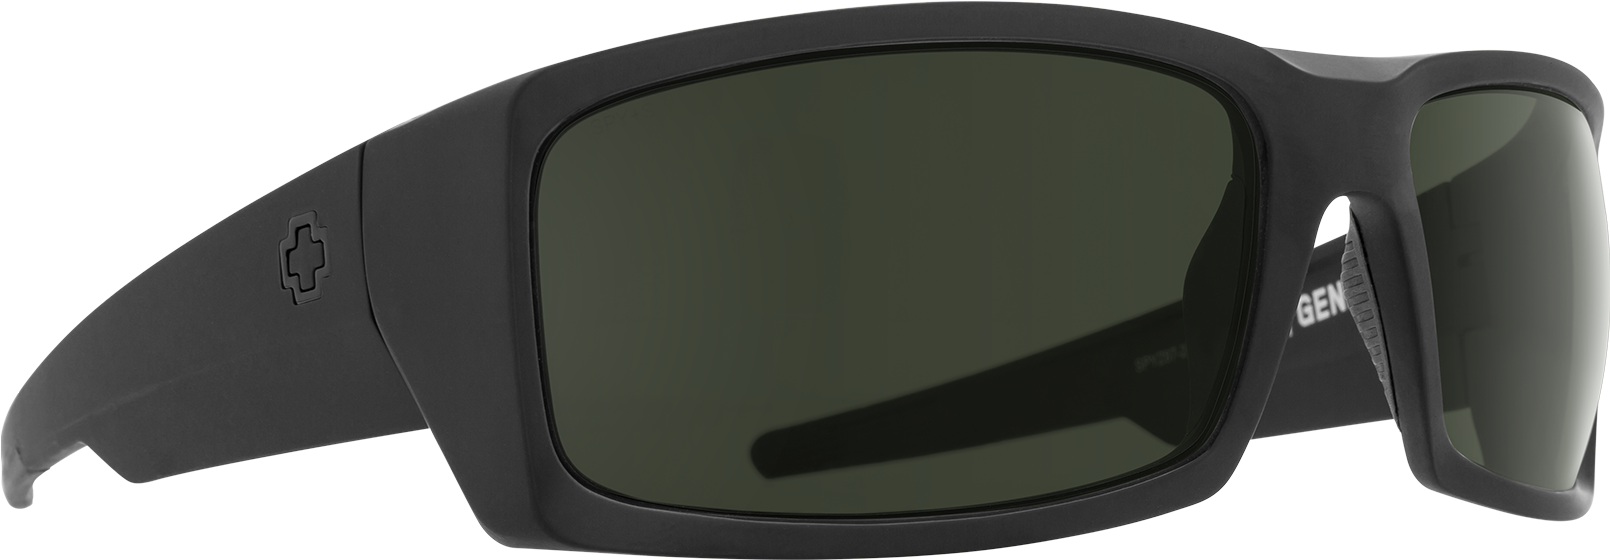 Black Sport Sunglasses Profile View PNG